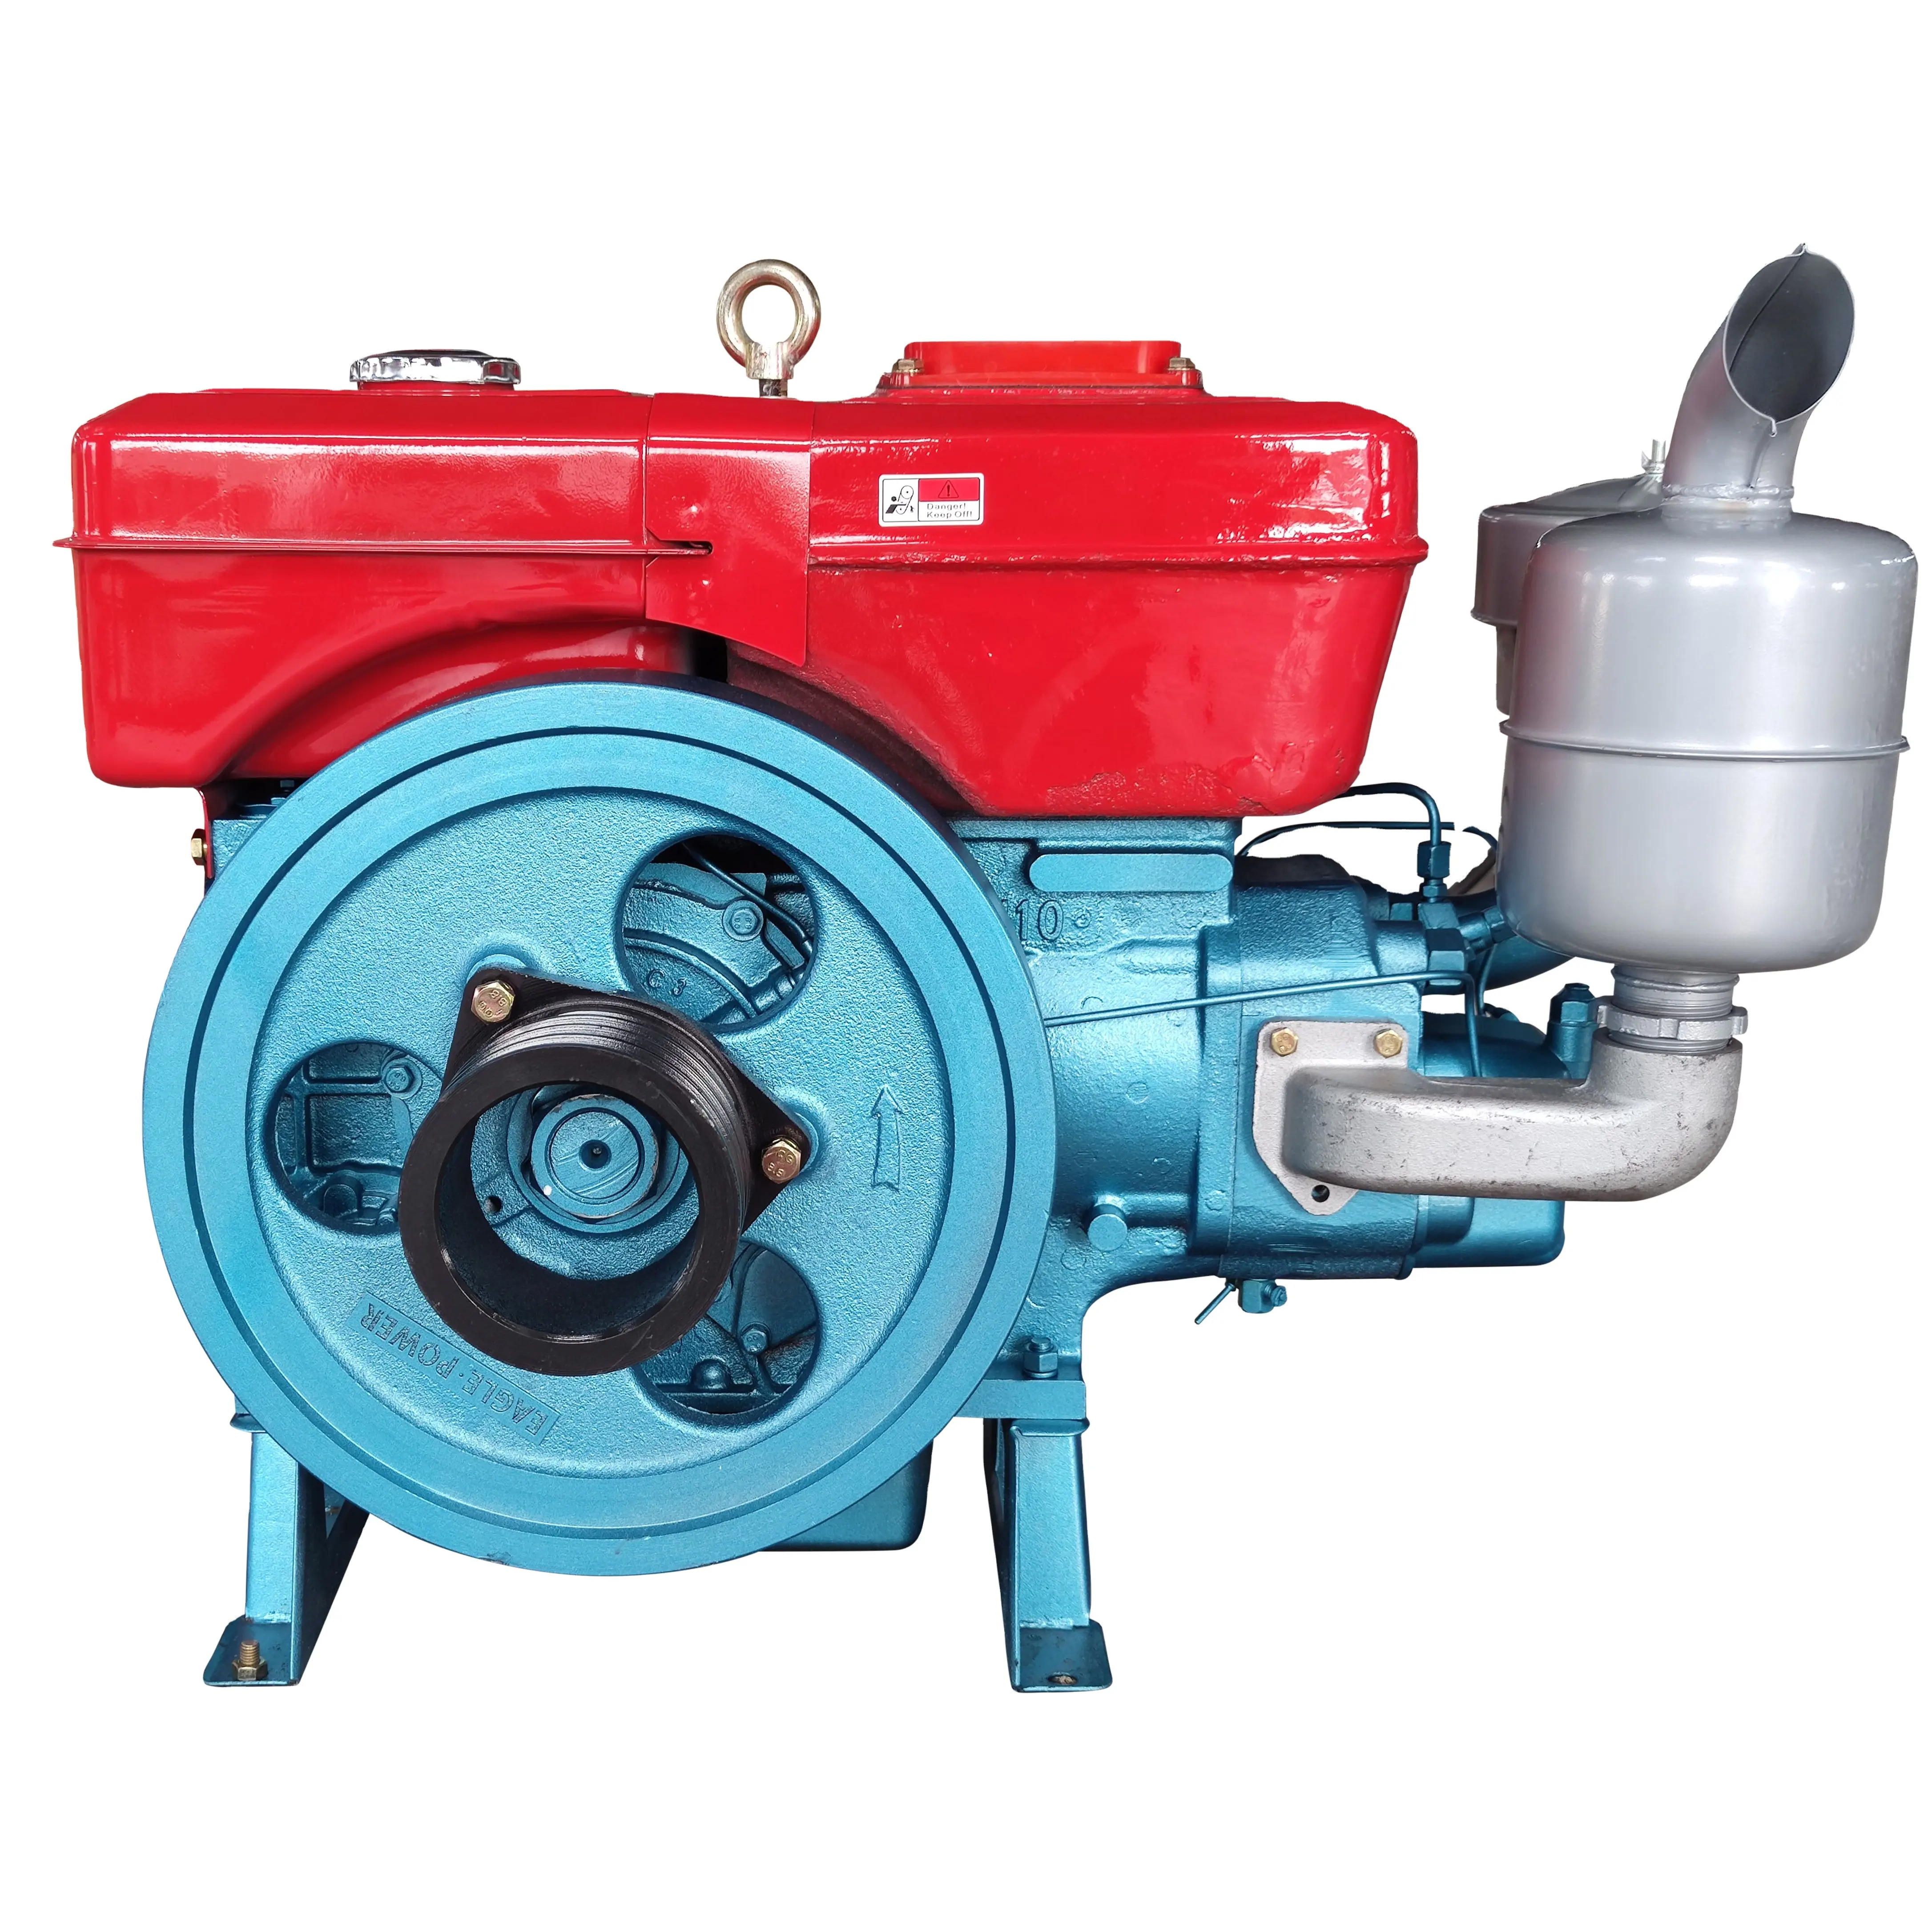 ZS1115 Single Cilindro Water-Cooled 4-Stroke Diesel Machinery Engine com partida elétrica Preço competitivo 1 ano de garantia